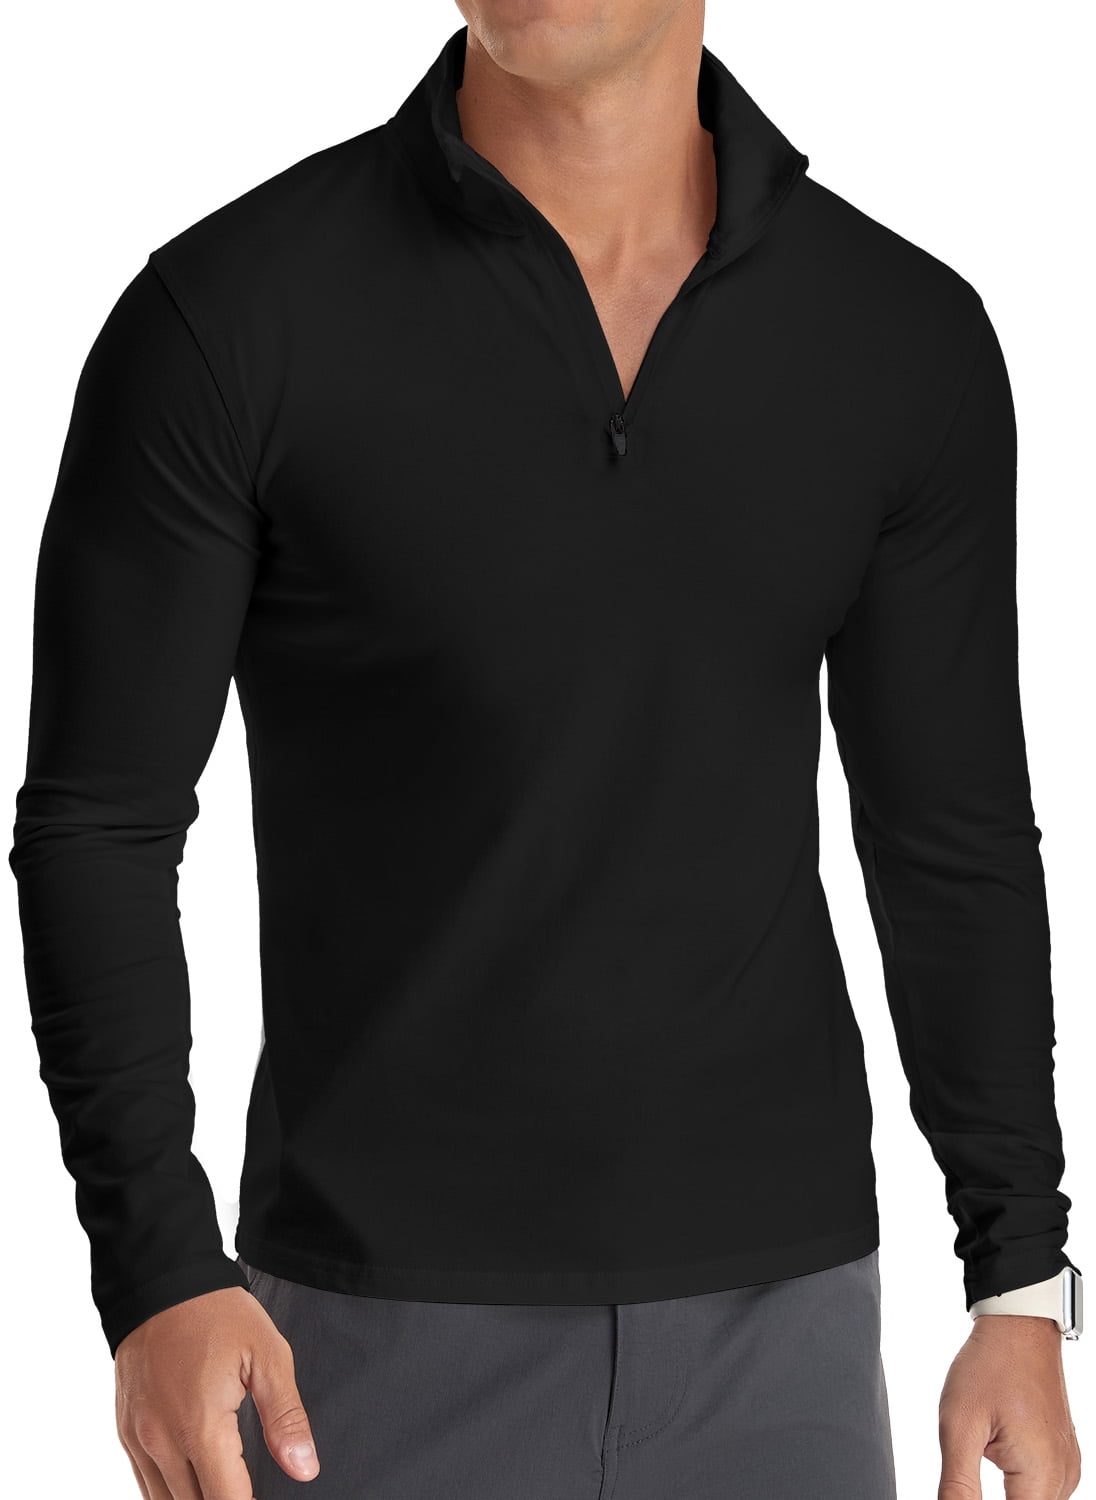 HAOMEILI Men's Long/Short Sleeve Polo Shirts Quarter-Zip Casual Slim ...